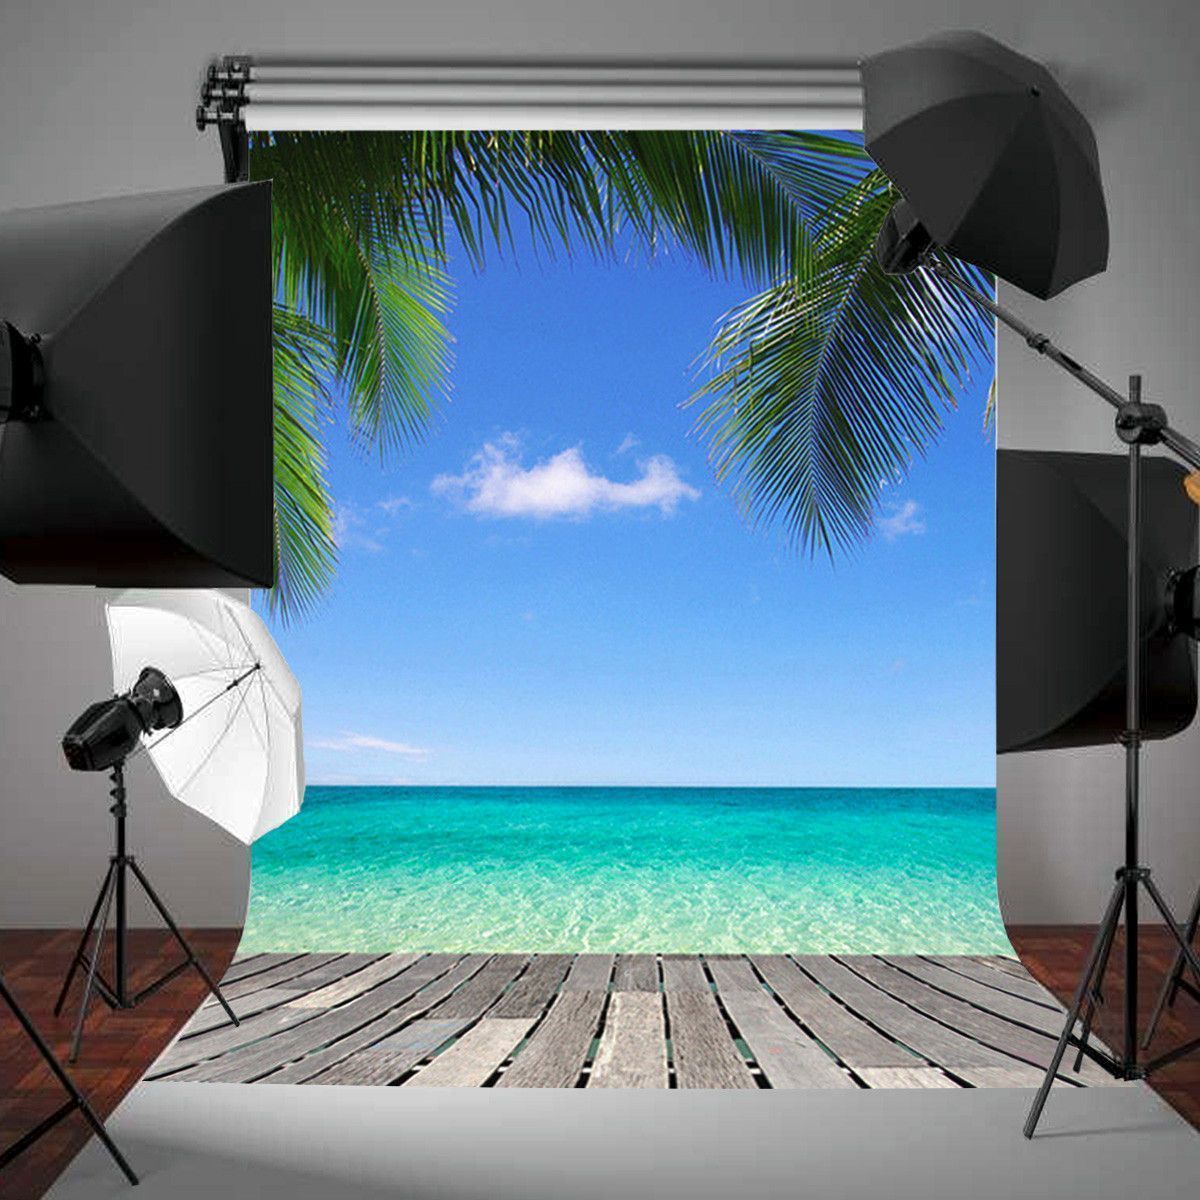 3x5FT-Vinyl-Summer-Blue-Sky-Beach-Coco-Photography-Backdrop-Background-Studio-Prop-1403519